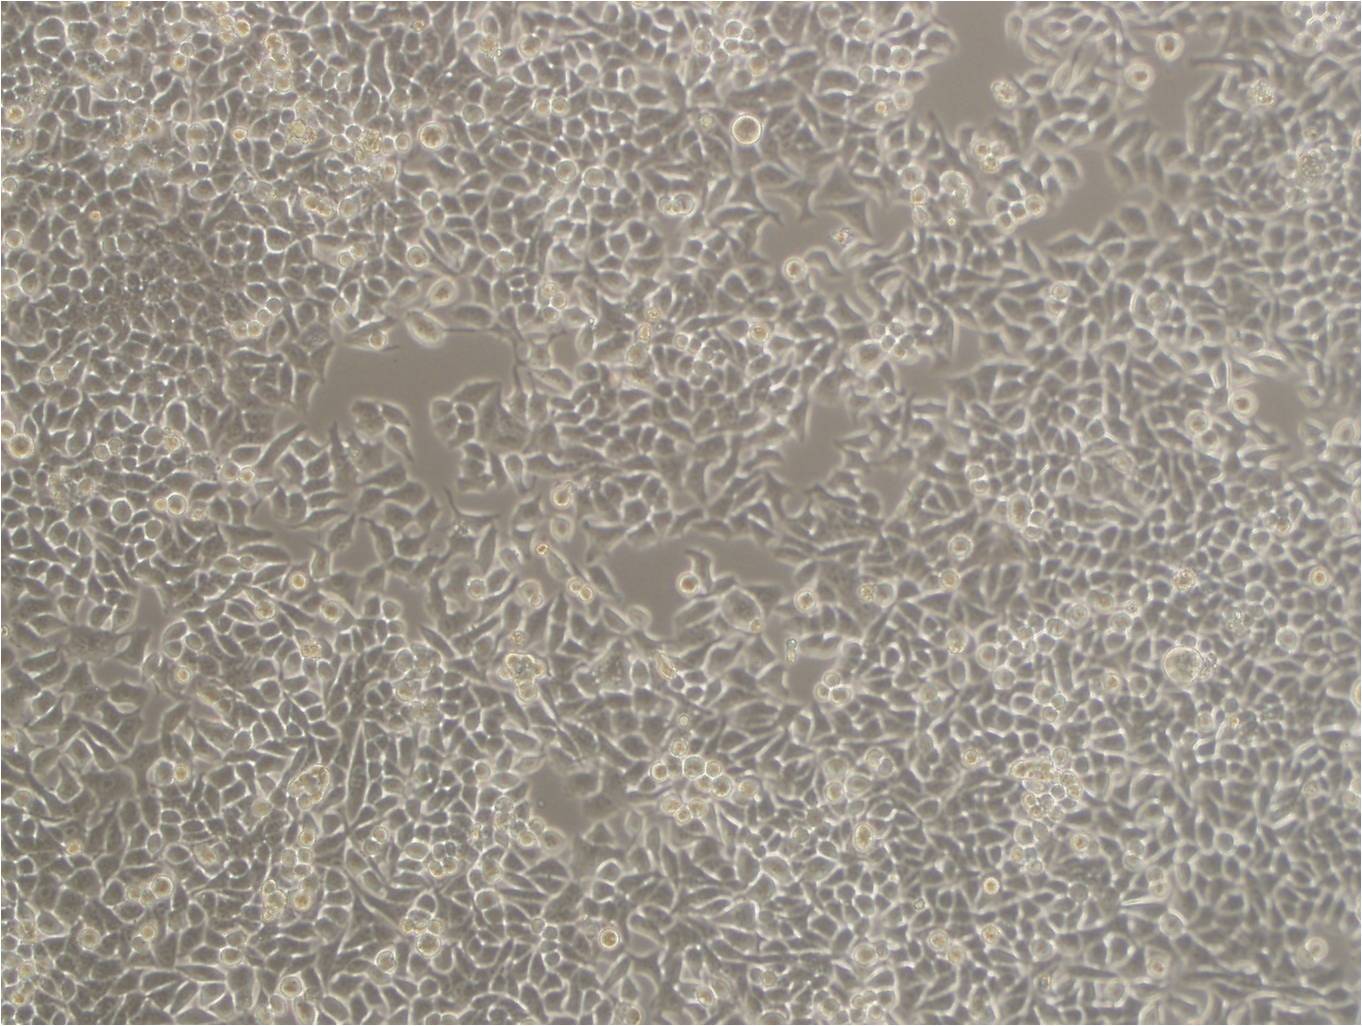 HCC15 epithelioid cells人肺癌细胞系